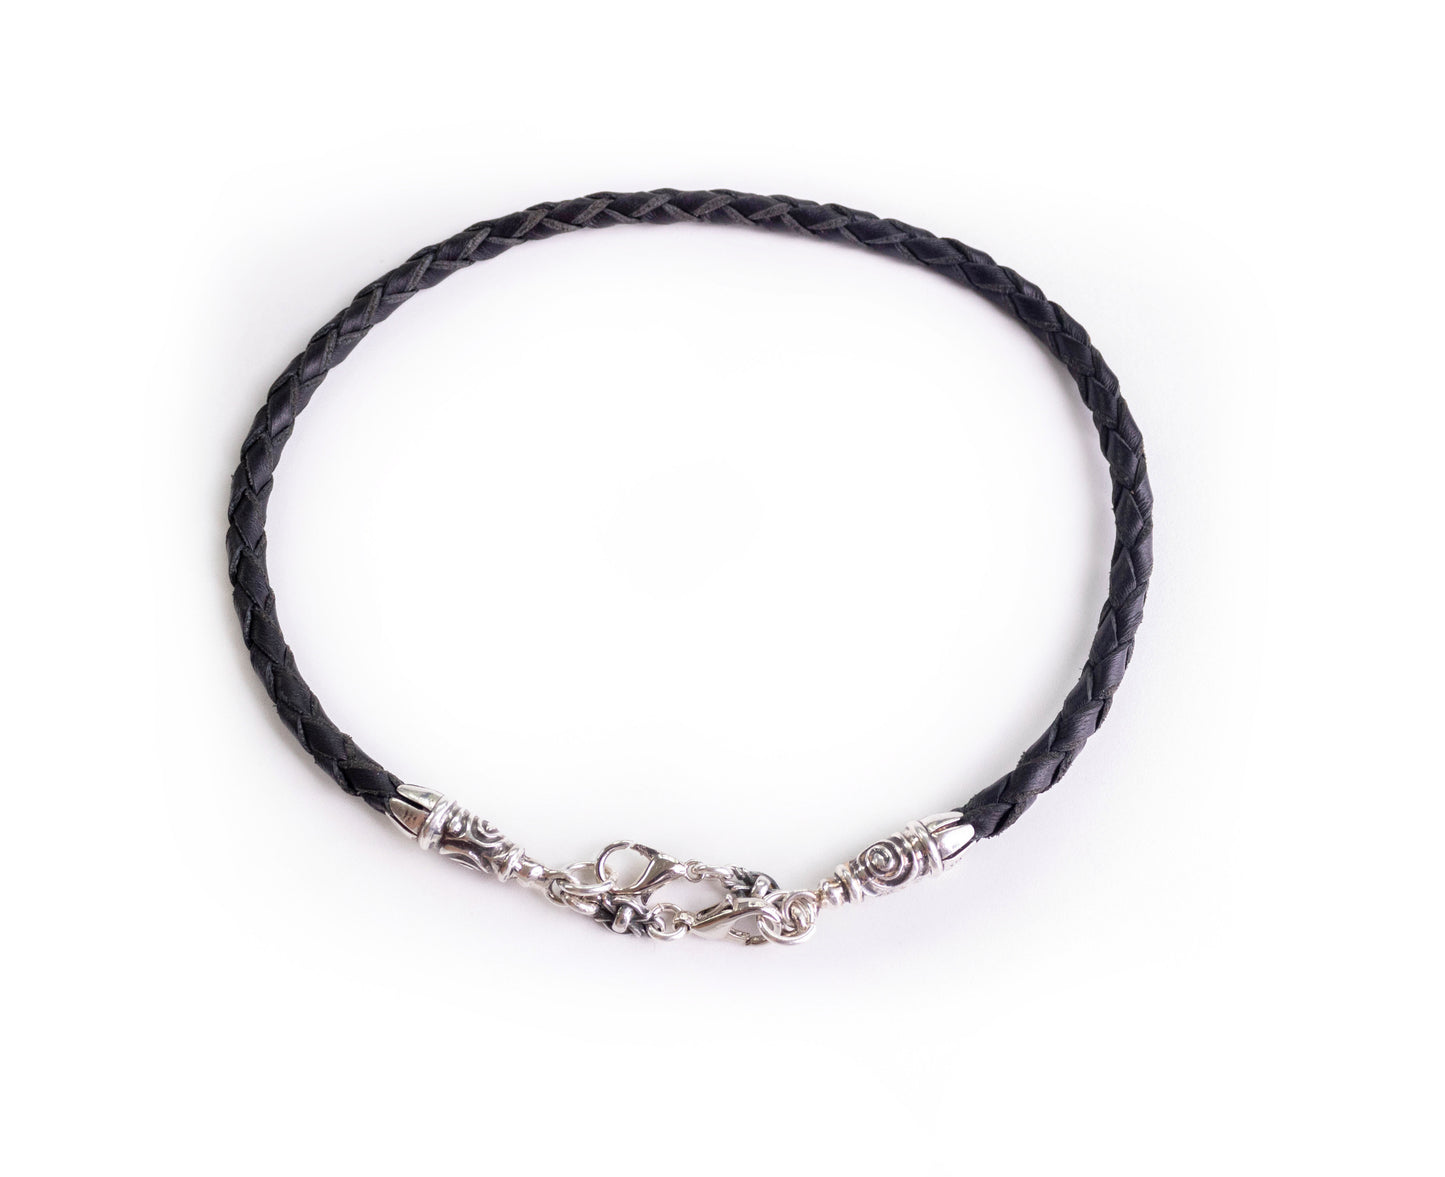 925 Sterling Silver & Genuine Leather Bracelet/Choker/Strap 4 strands Hand-braided.- P22